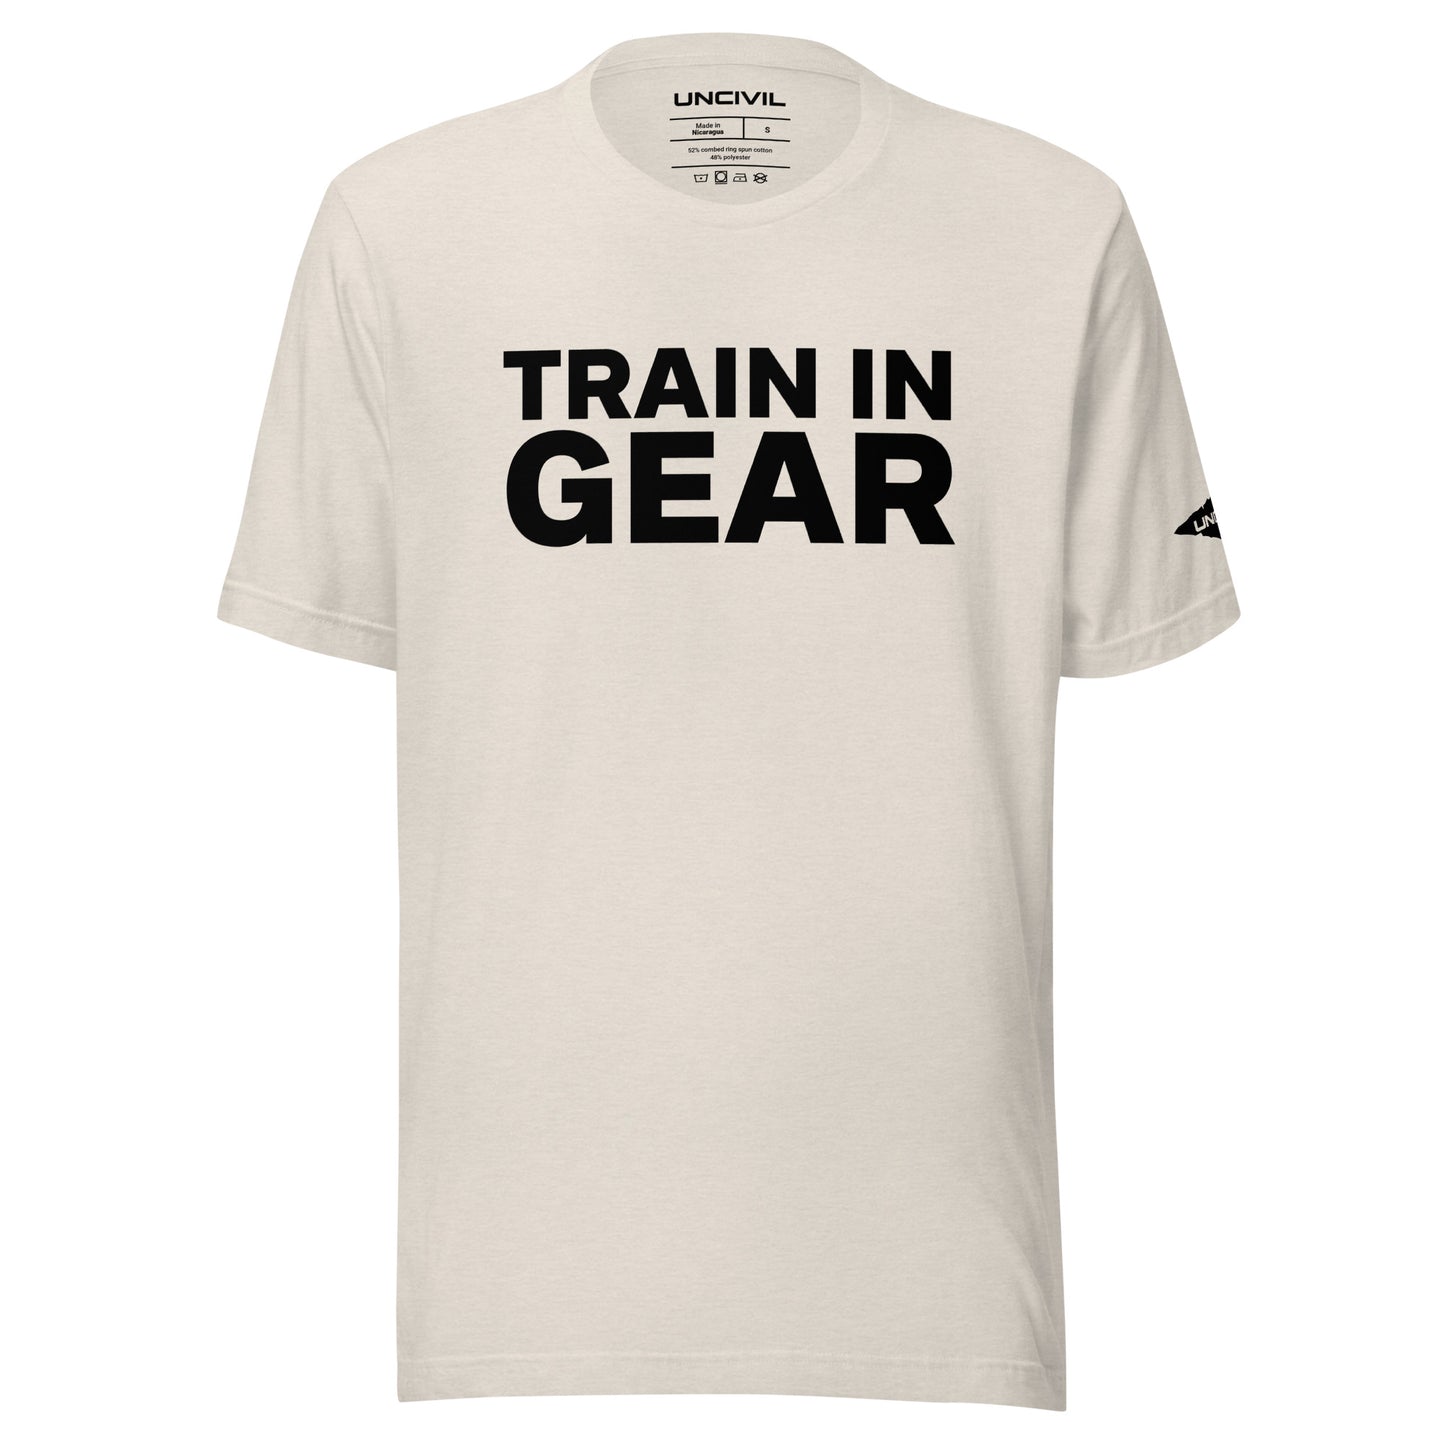 Train in Gear Firefighter shirt. Heather Dust Cream Unisex t-shirt.